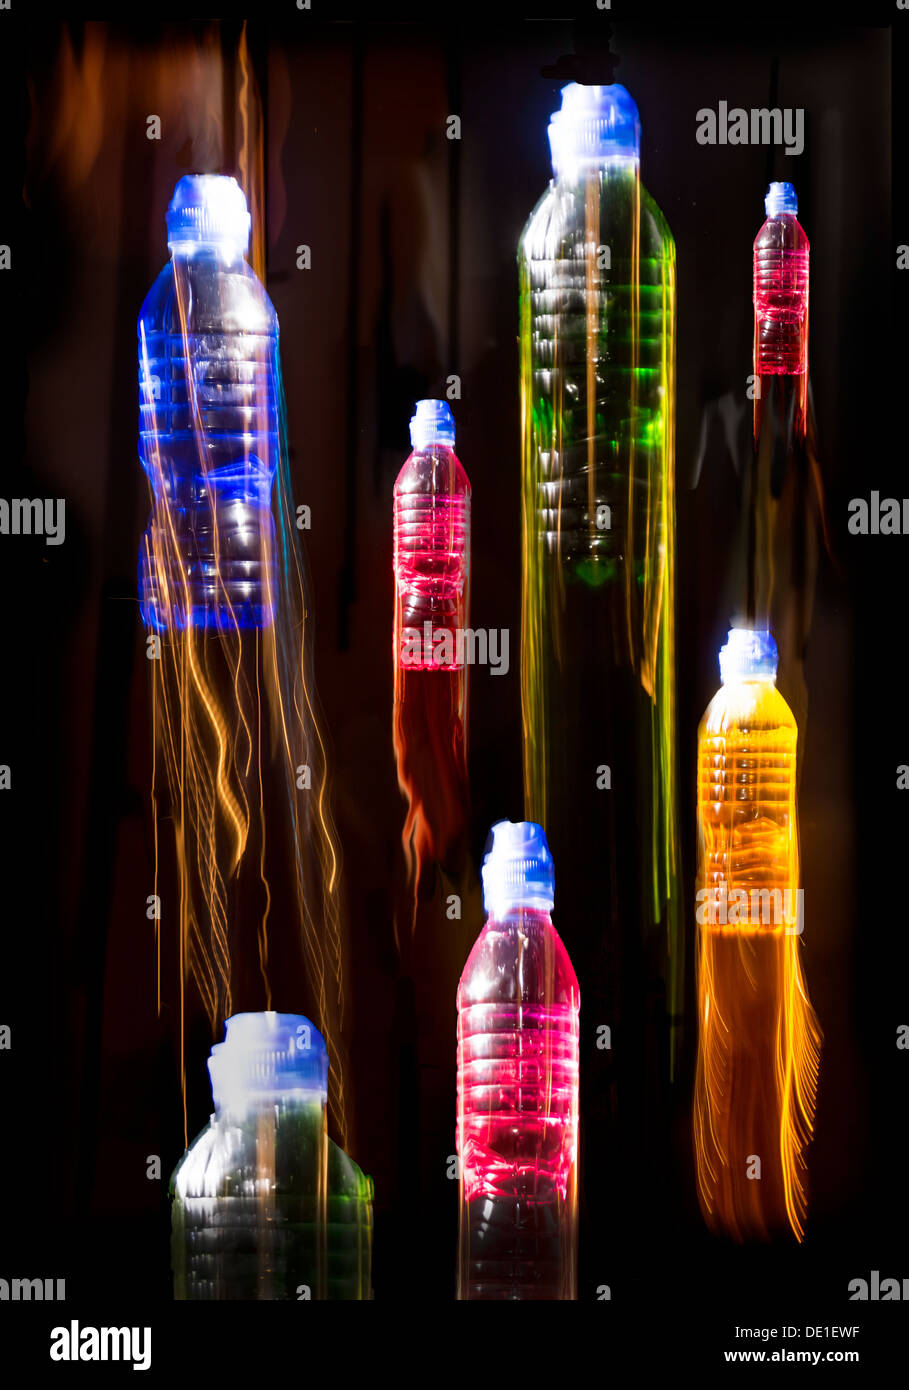 Swinging bottles creating coloured light trails Stock Photo